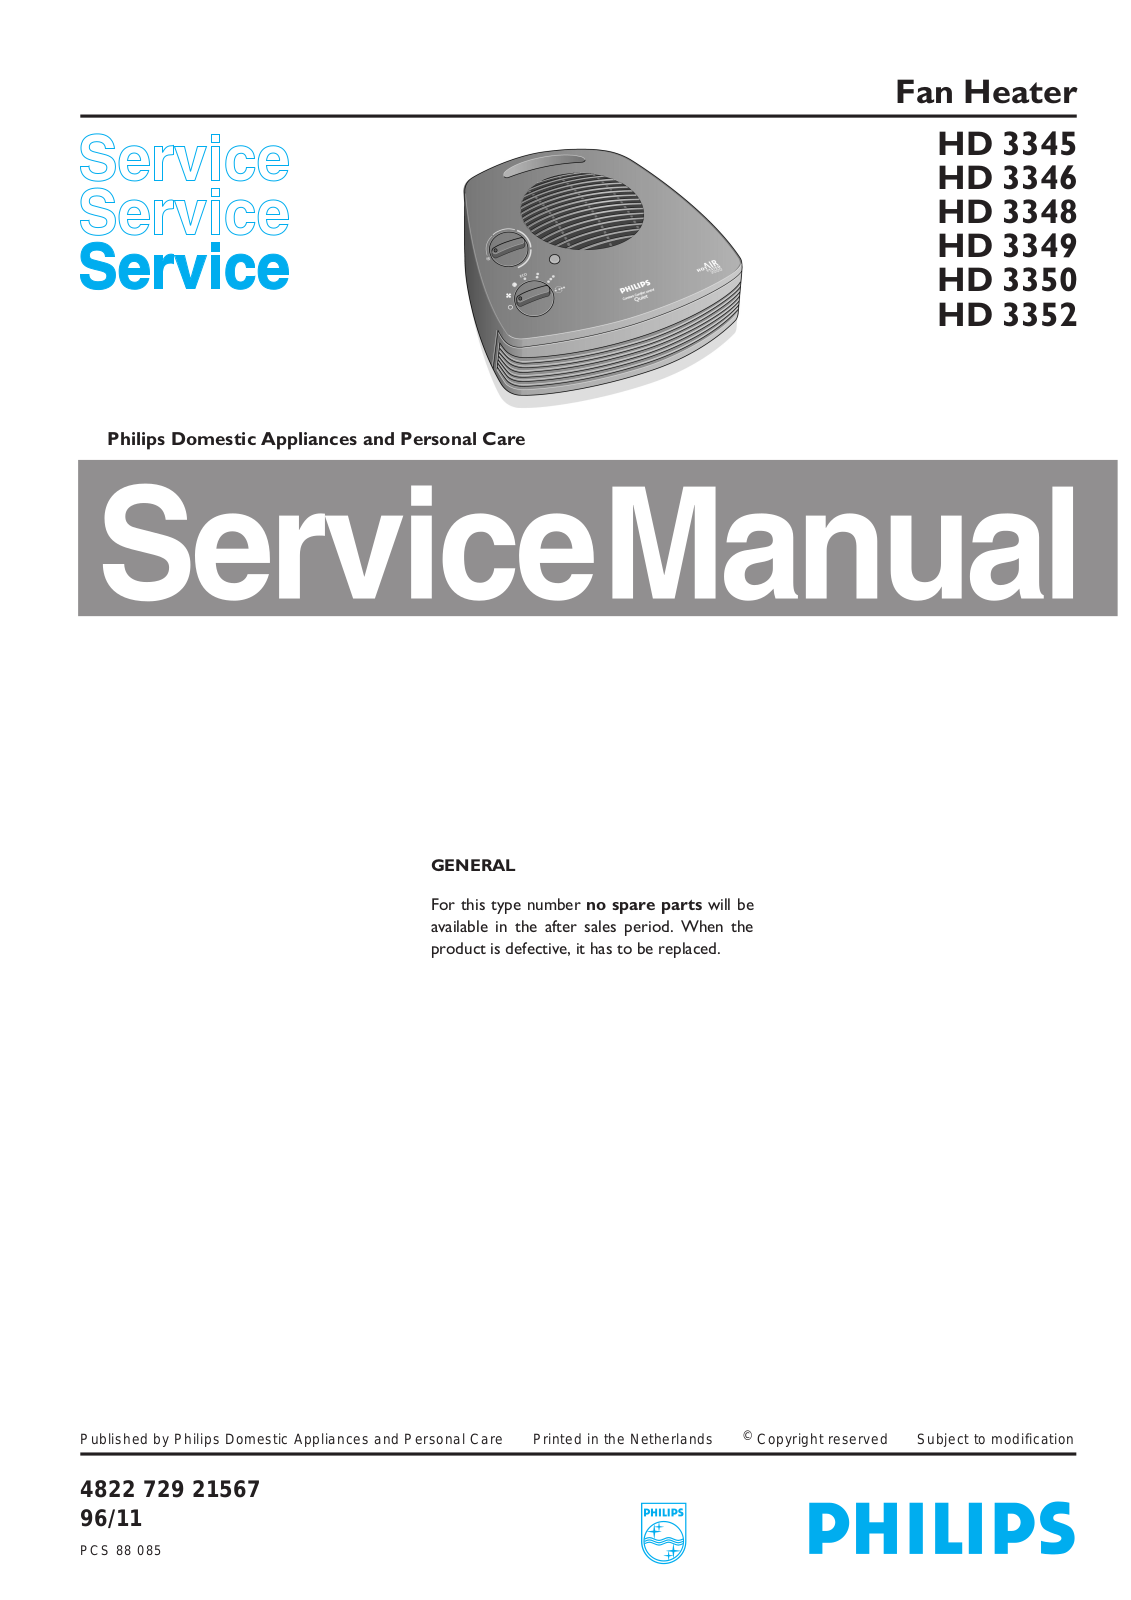 Philips HD 3352, HD 3350, HD 3348, HD 3349, HD 3346 Service Manual